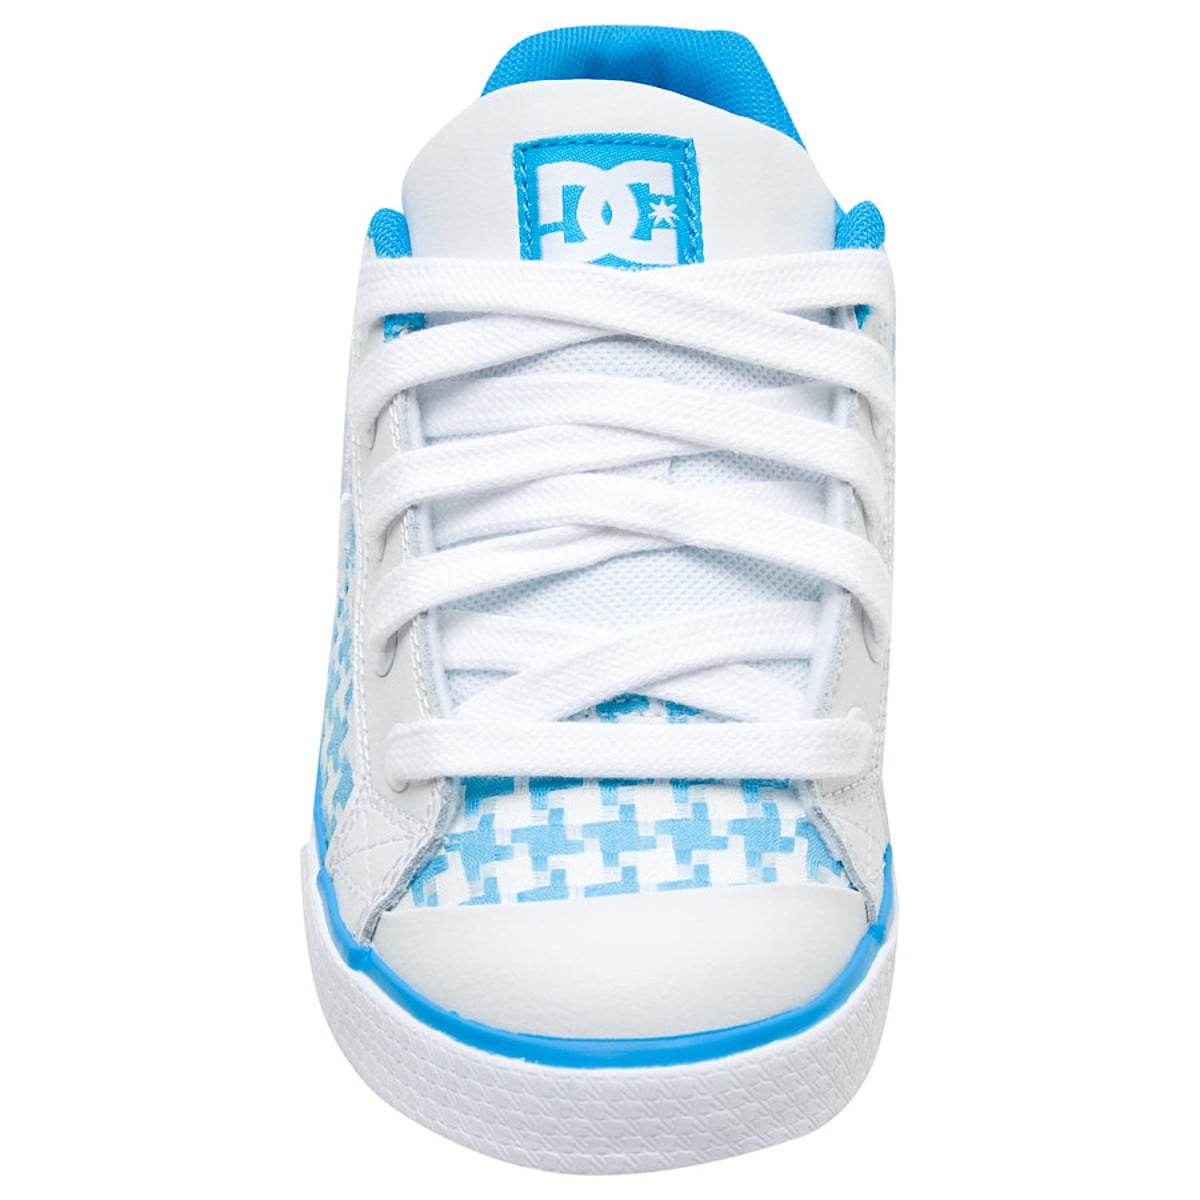 DC Shoes Chelsea Women's Trainers, Navy Blue White, 5 AU